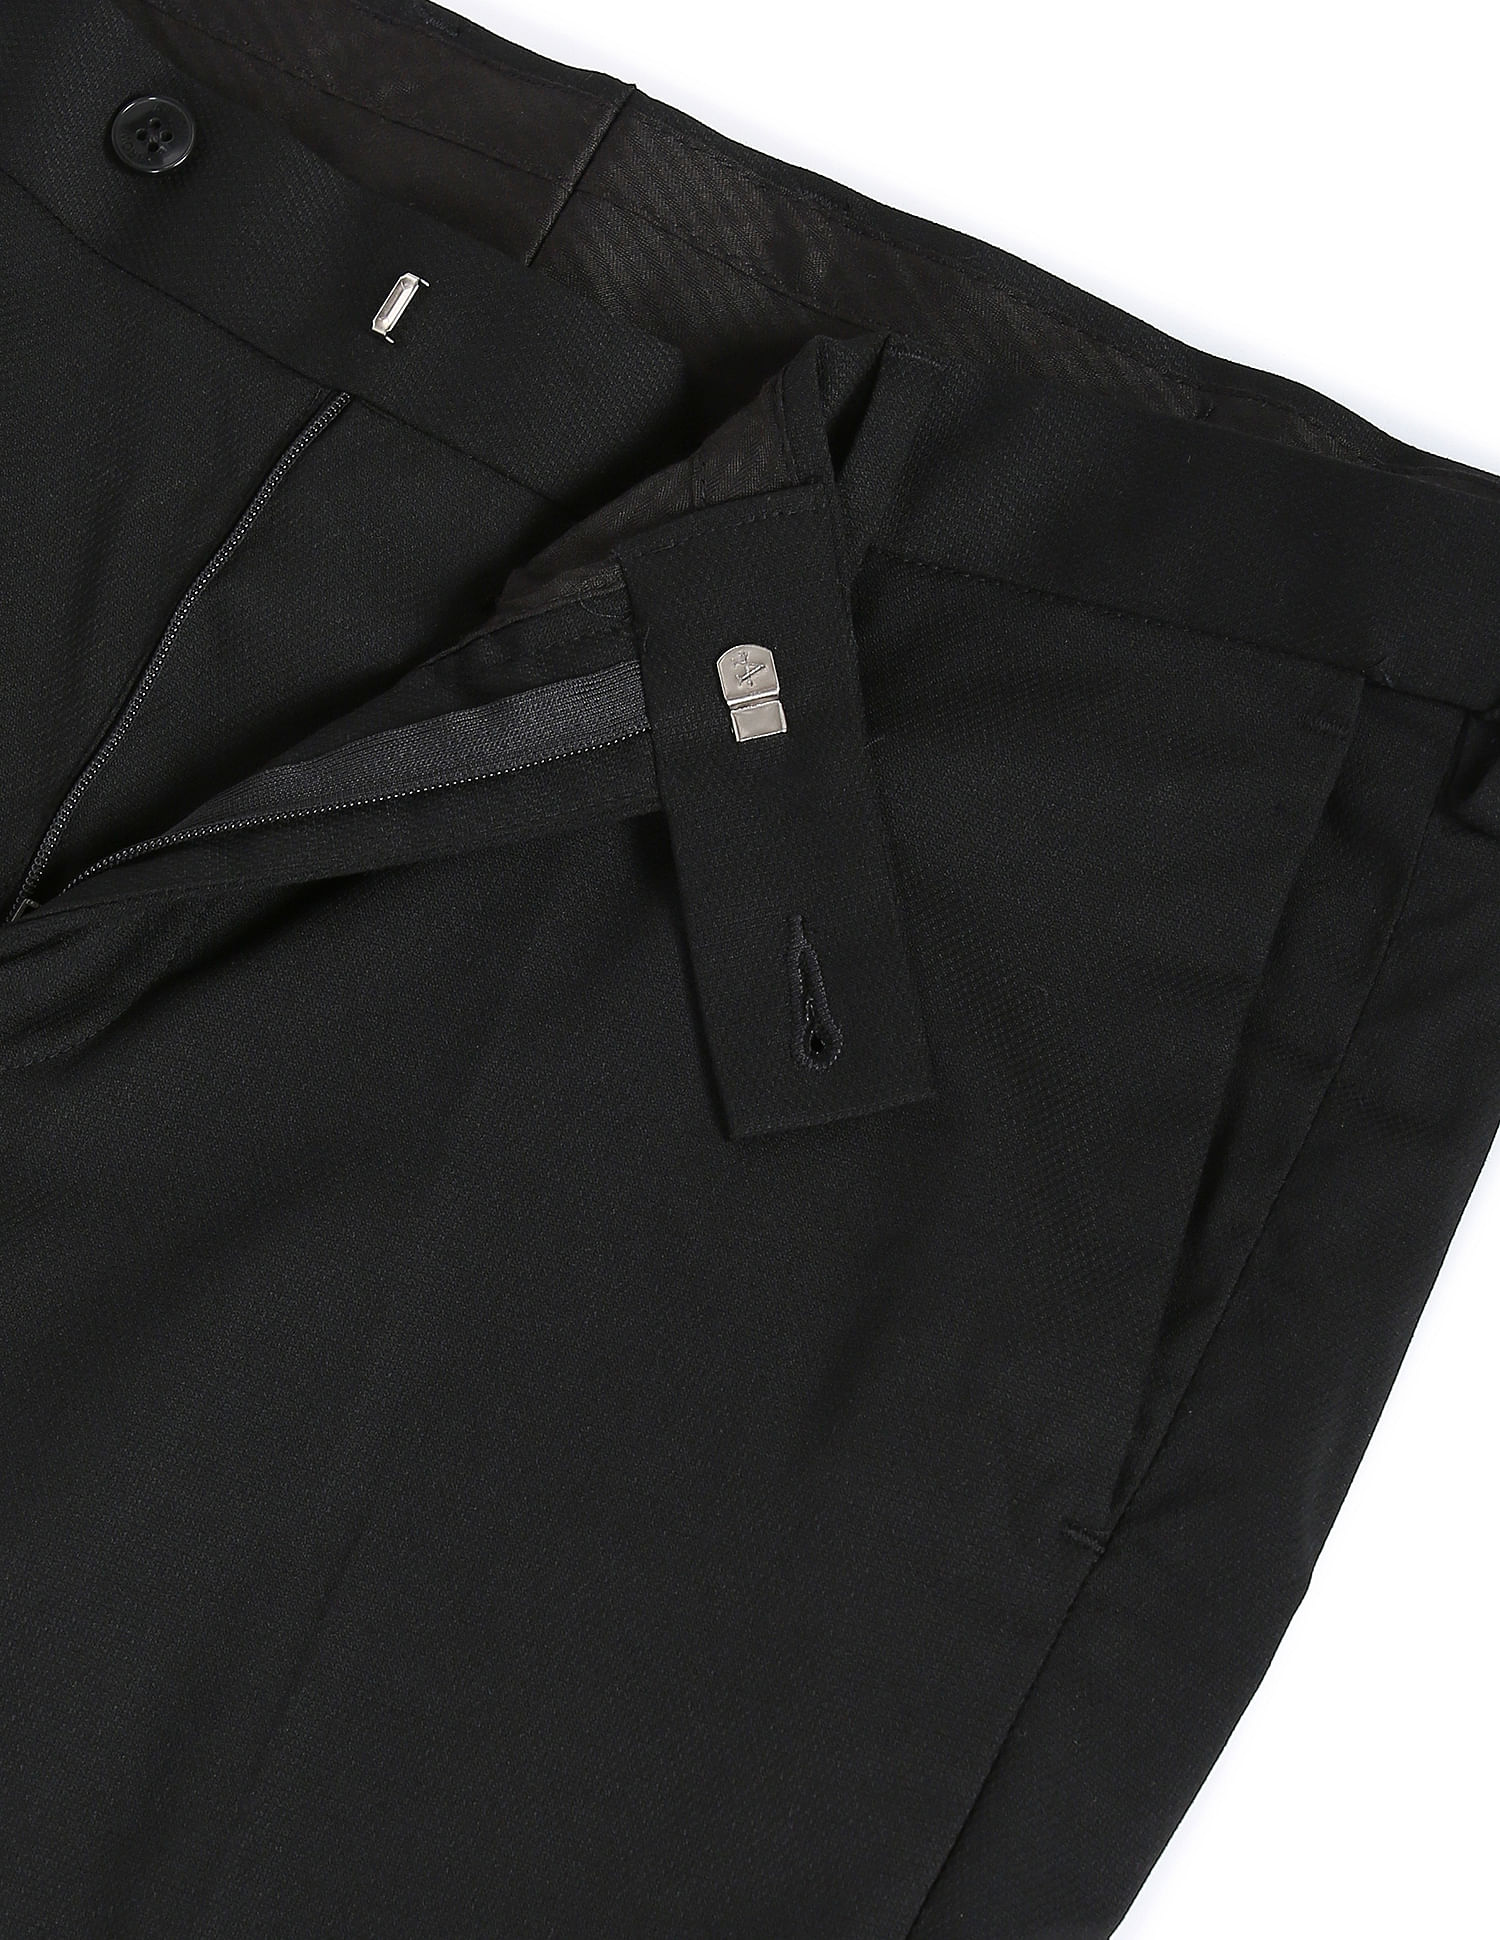 Regular Fit Glittery tailored trousers - Black/Pinstriped - Men | H&M IN